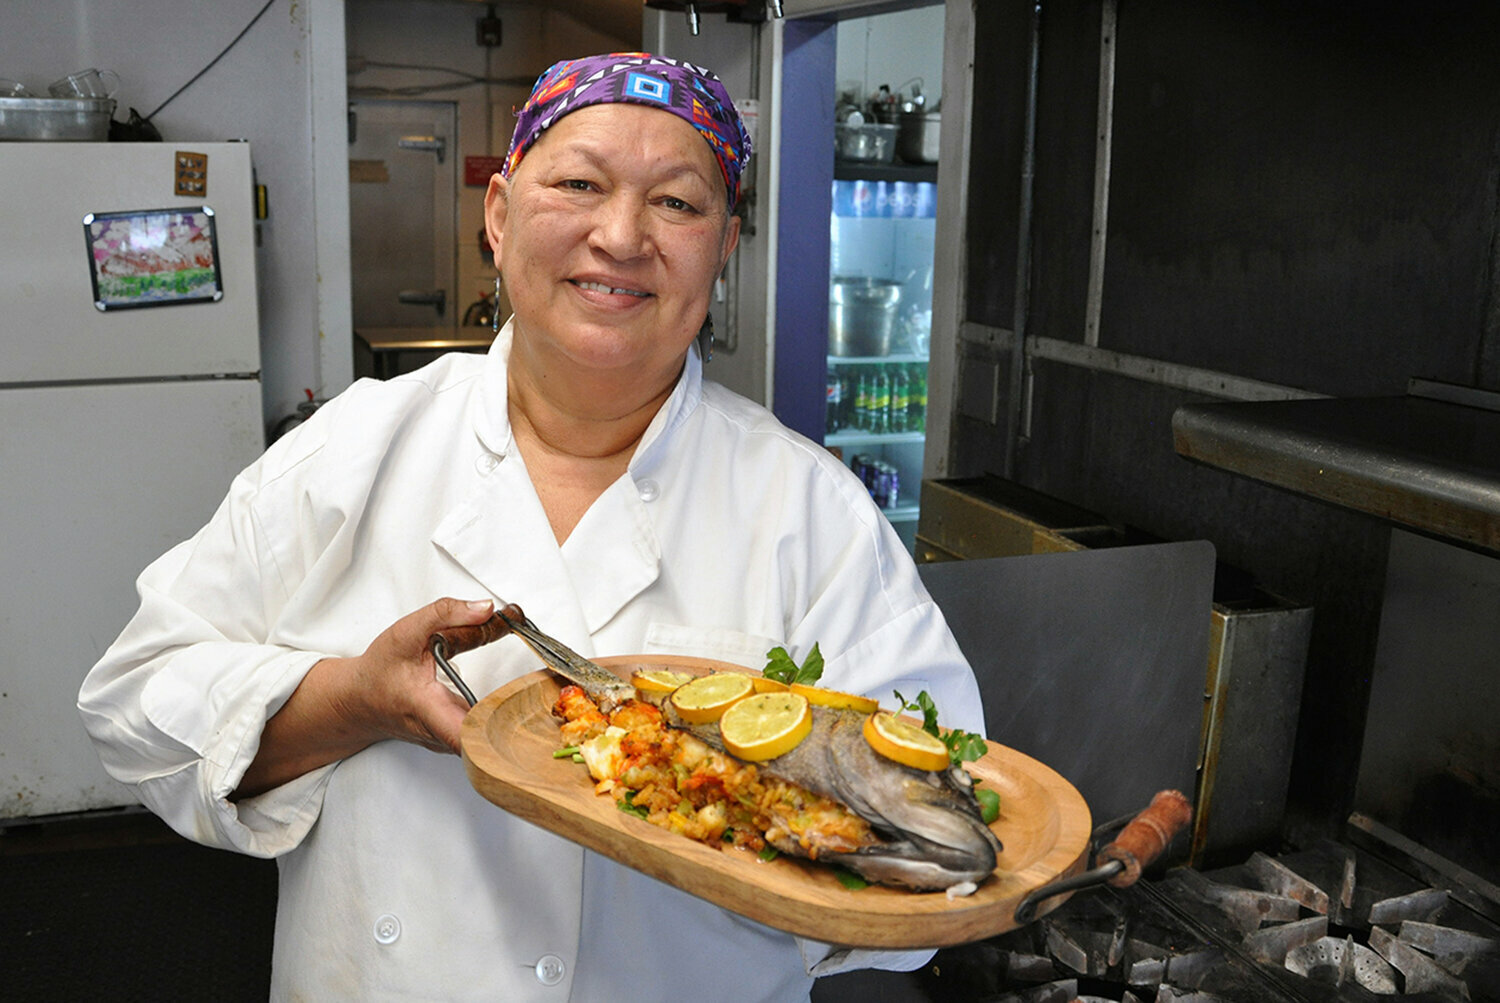 Mashpee Wampanoag chef Sherry Pocknett of Sly Fox Den Too